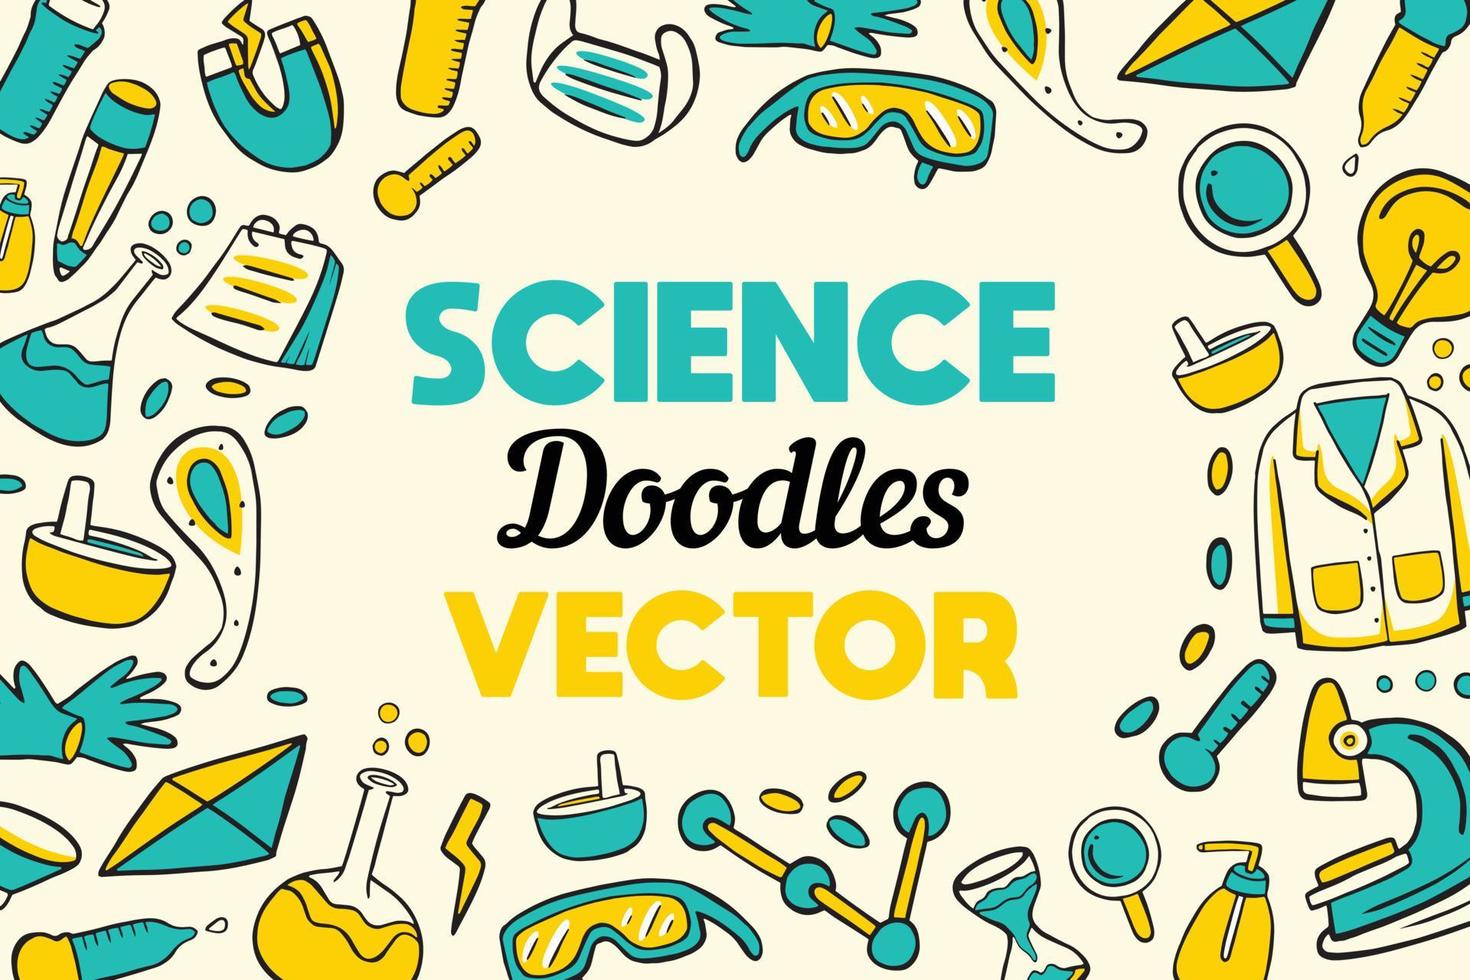 science doodles vector background